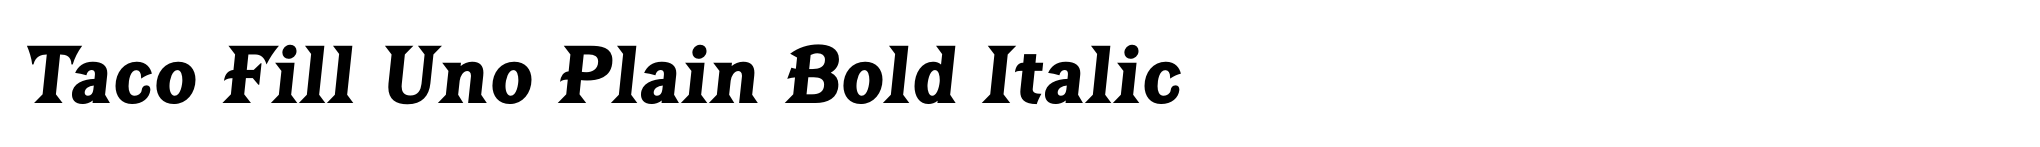 Taco Fill Uno Plain Bold Italic image